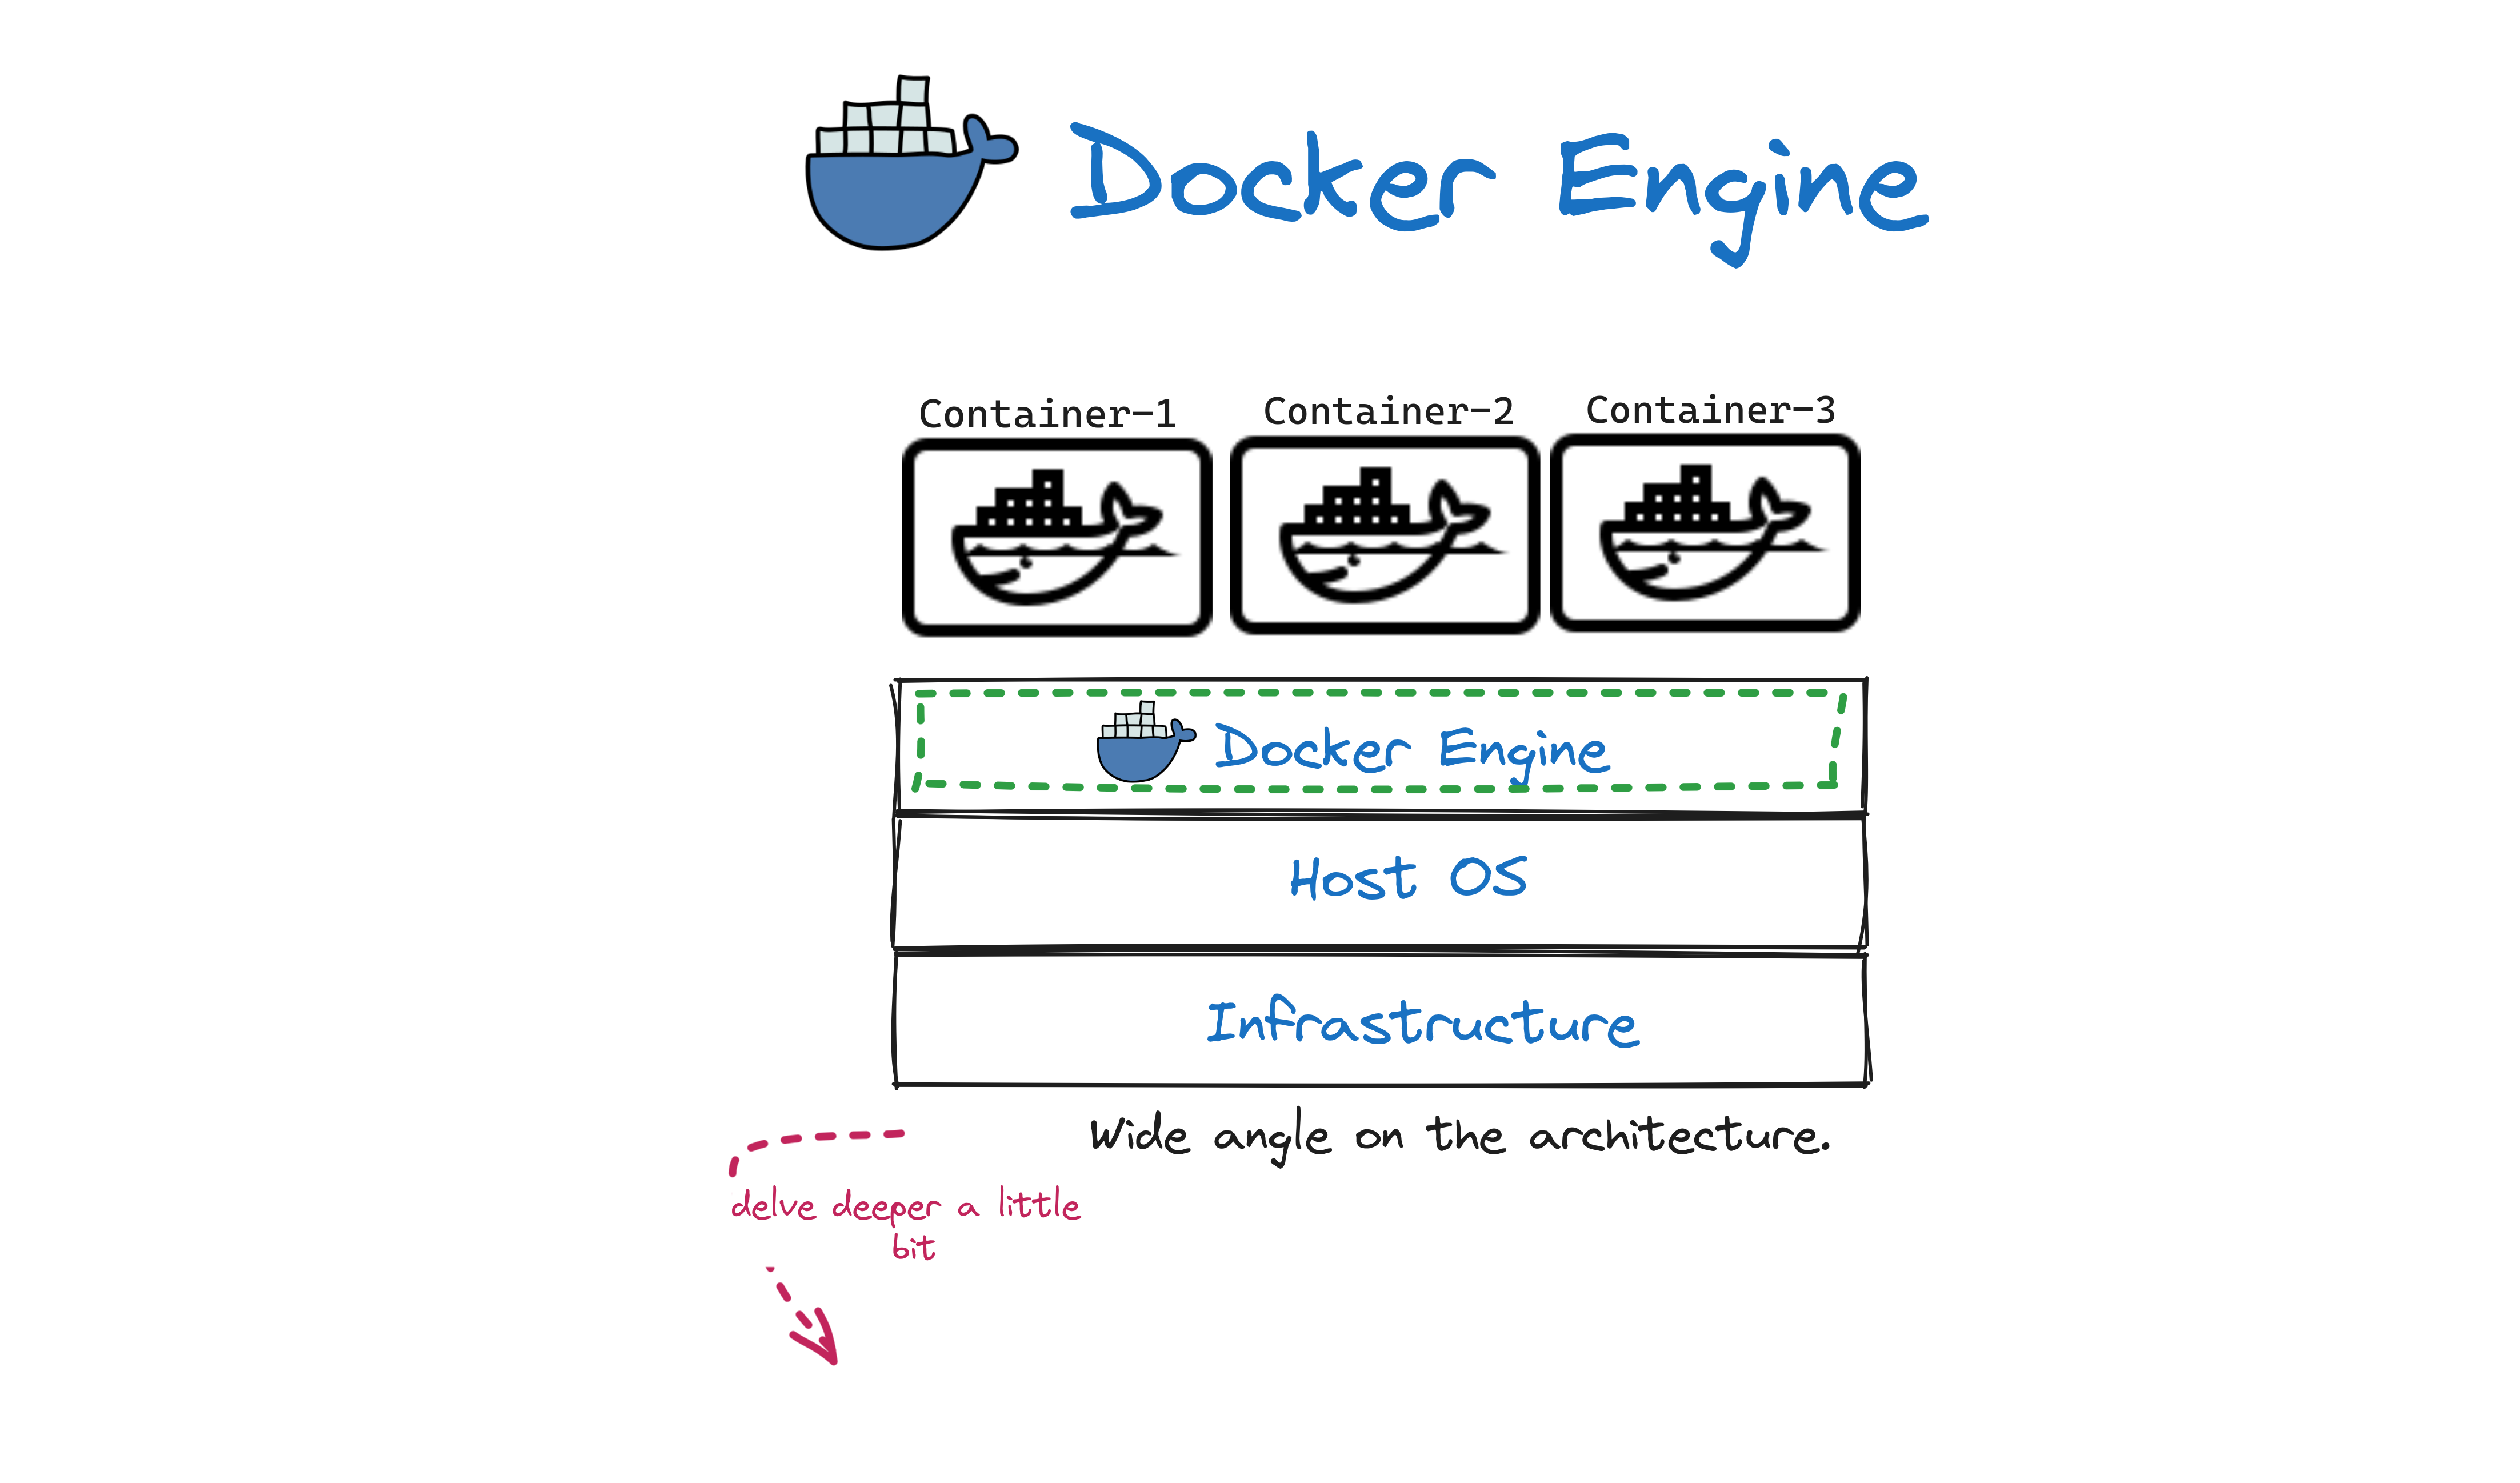 Docker EngineI